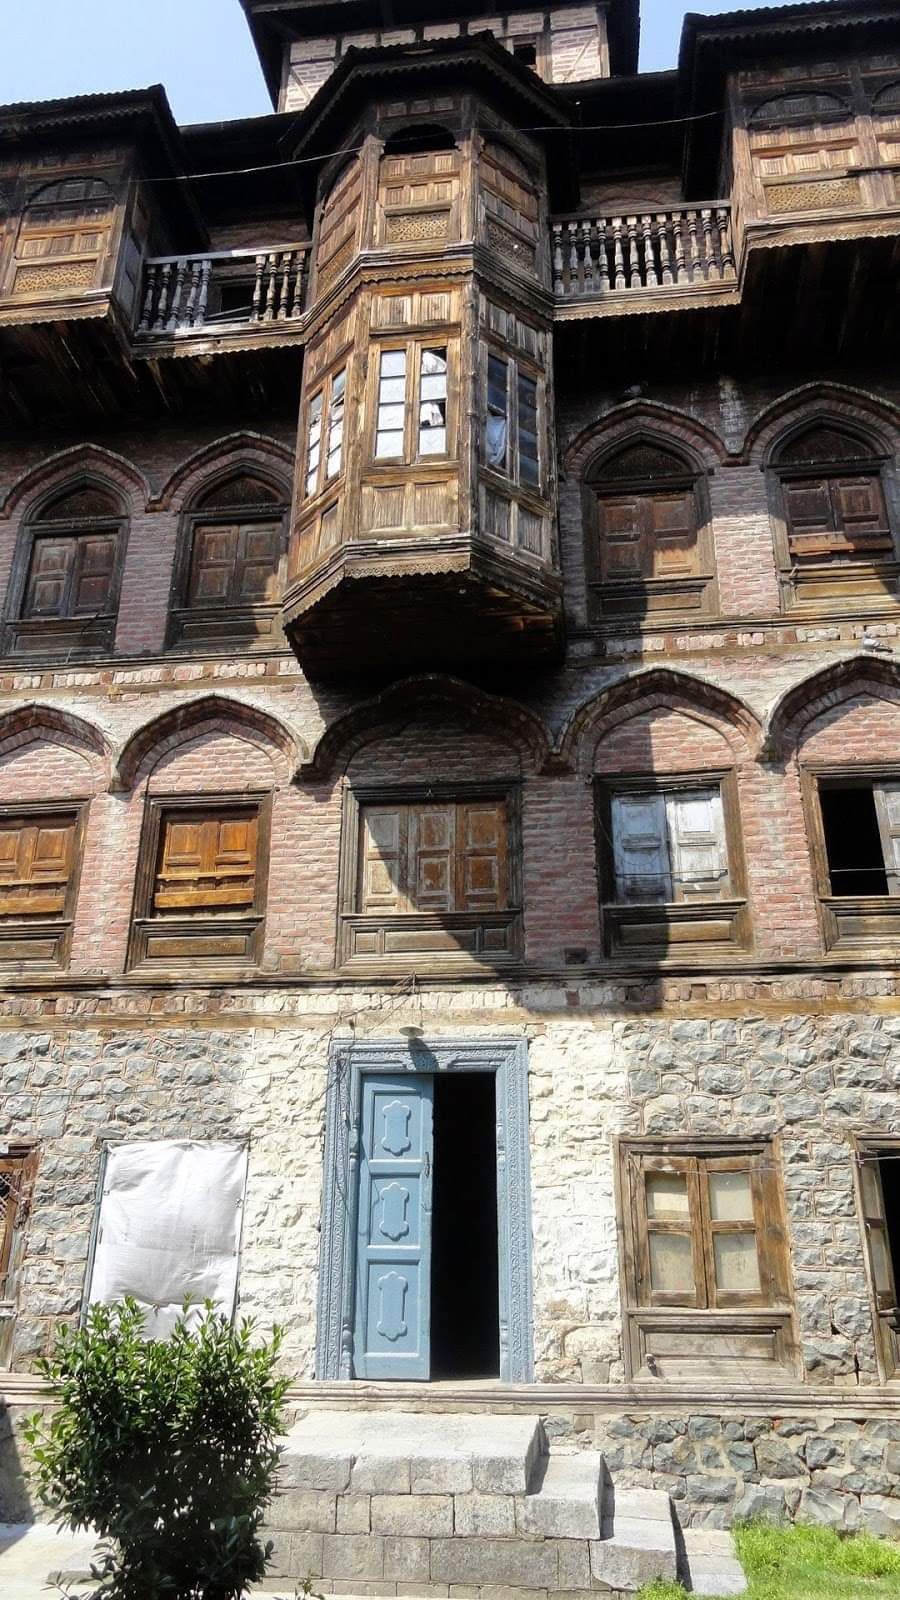 Types Of Houses - Kashmiri architecture